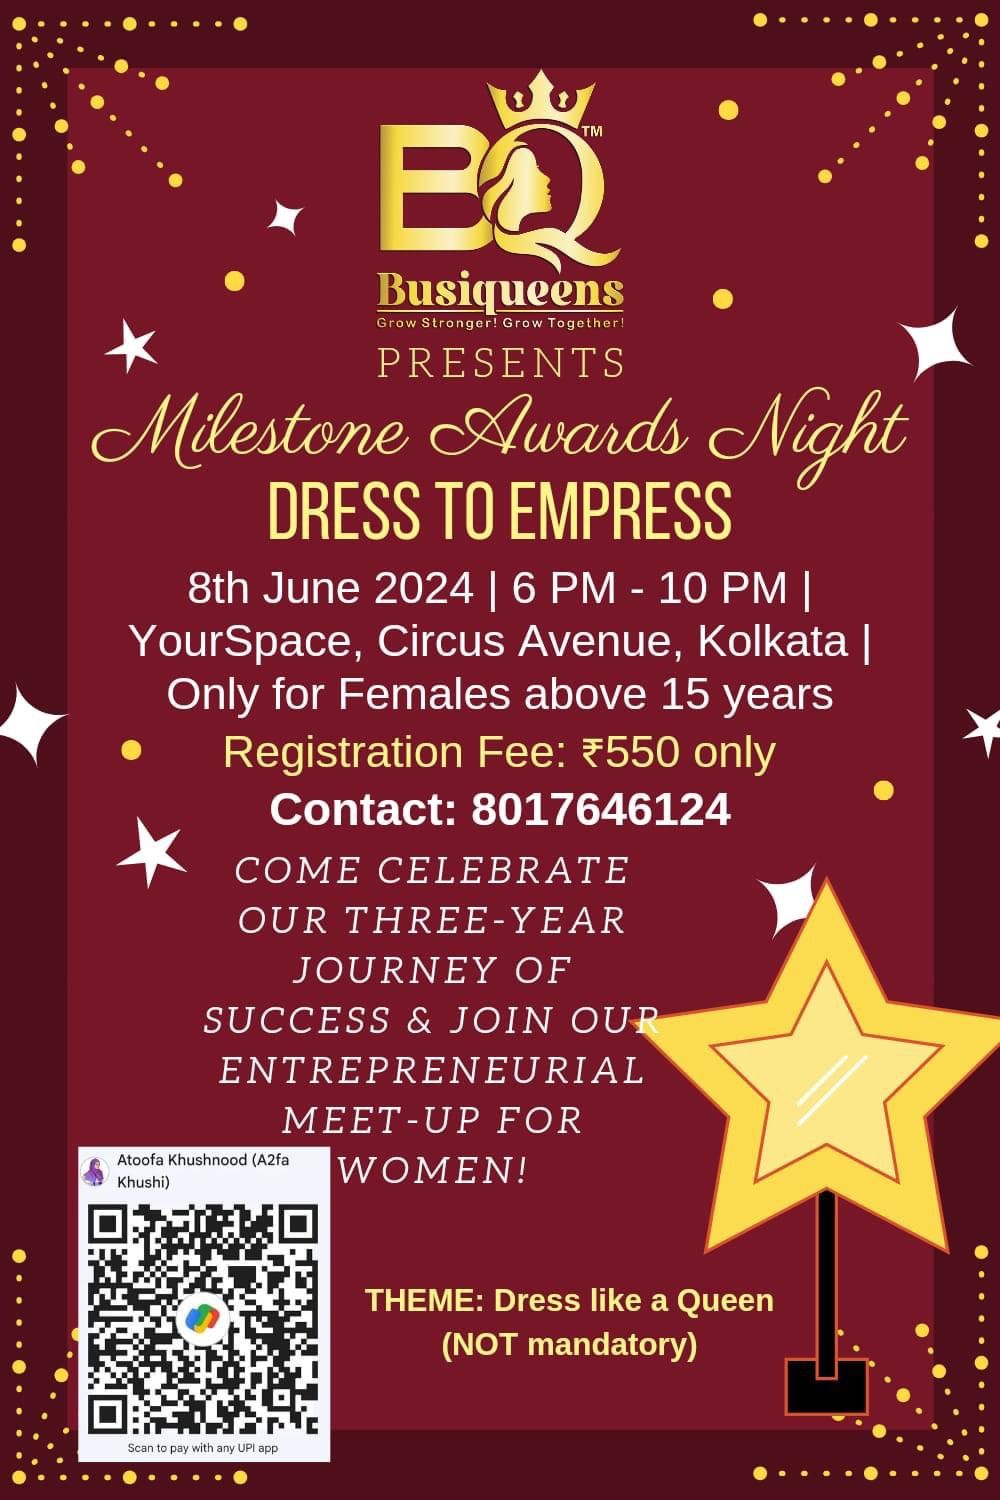 Busiqueens Milestone Awards Night - Dress to Empress